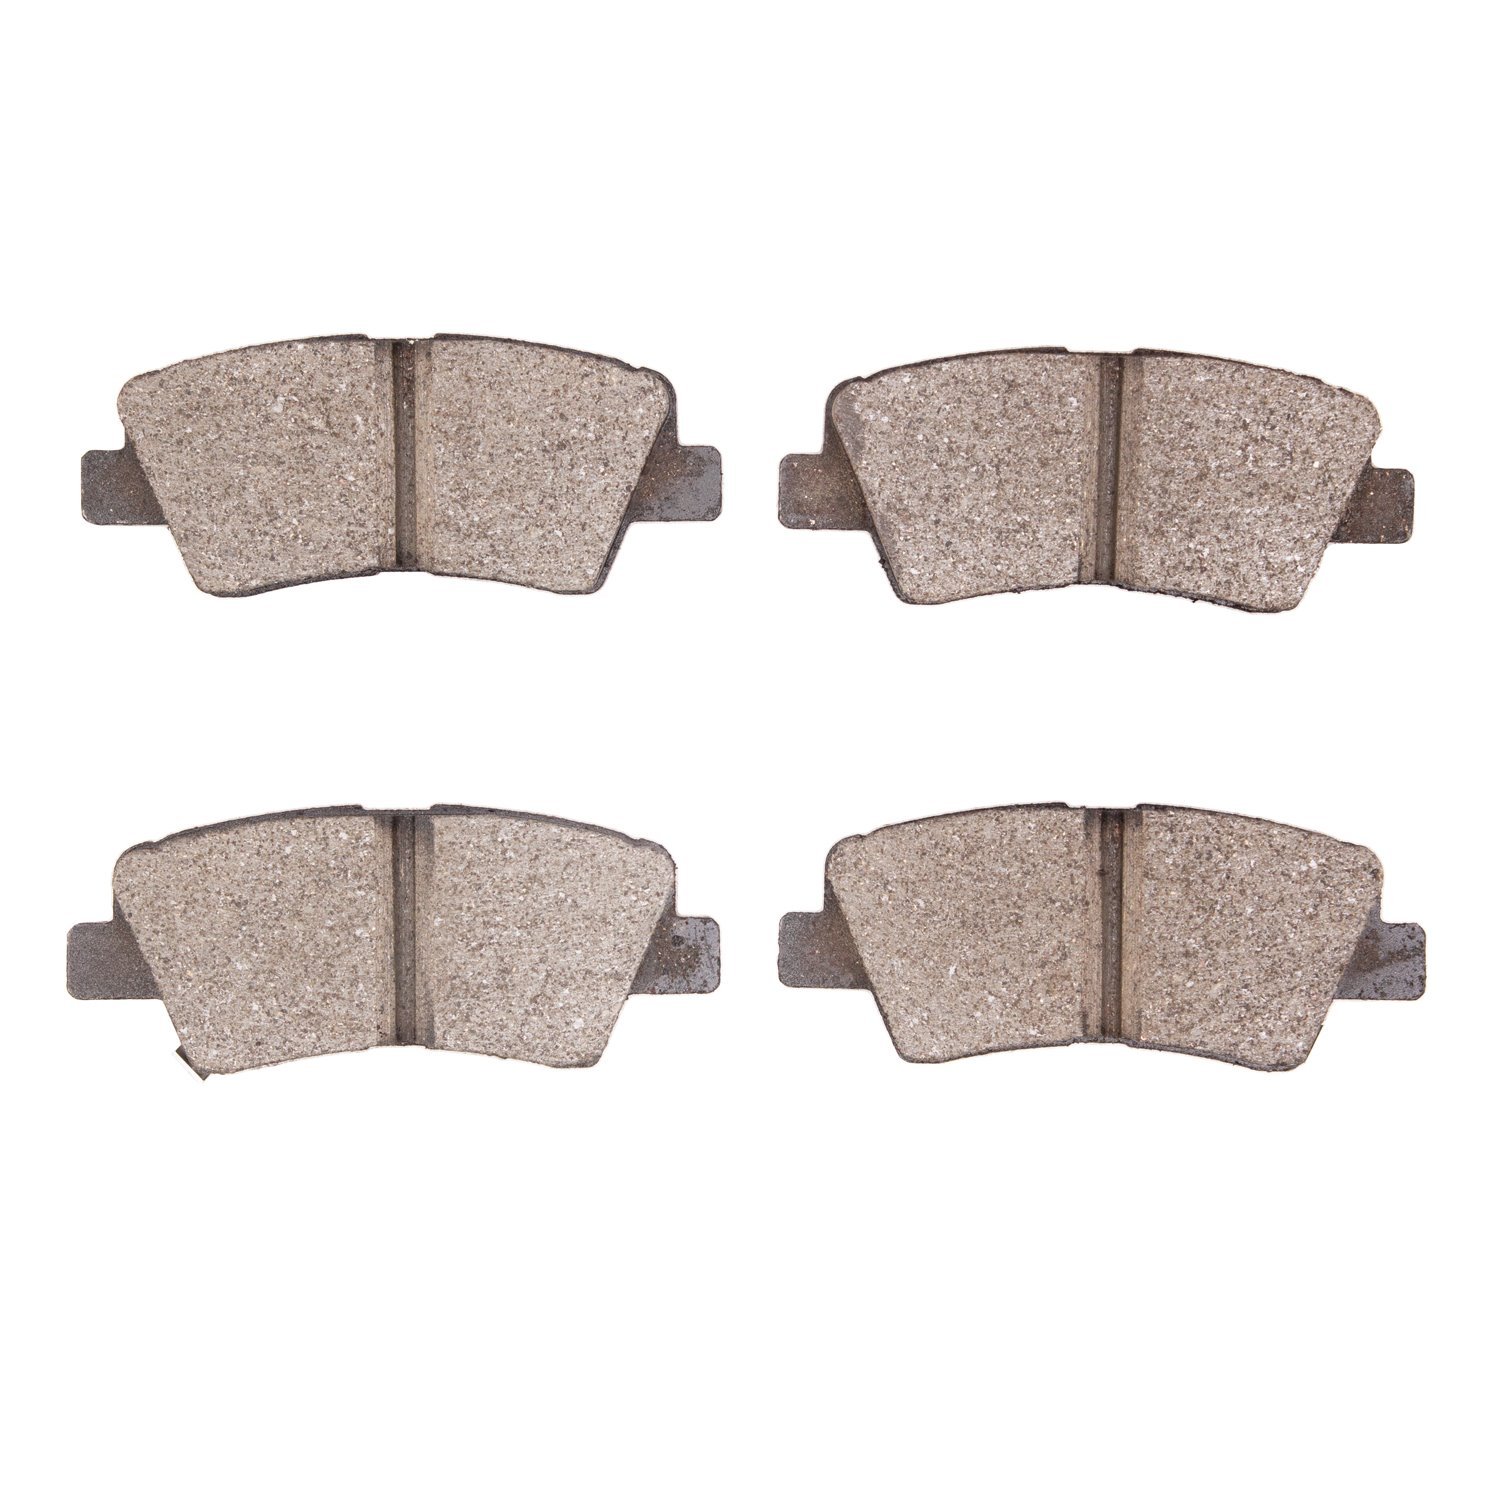 1551-2098-00 5000 Advanced Ceramic Brake Pads, Fits Select Kia/Hyundai/Genesis, Position: Rear